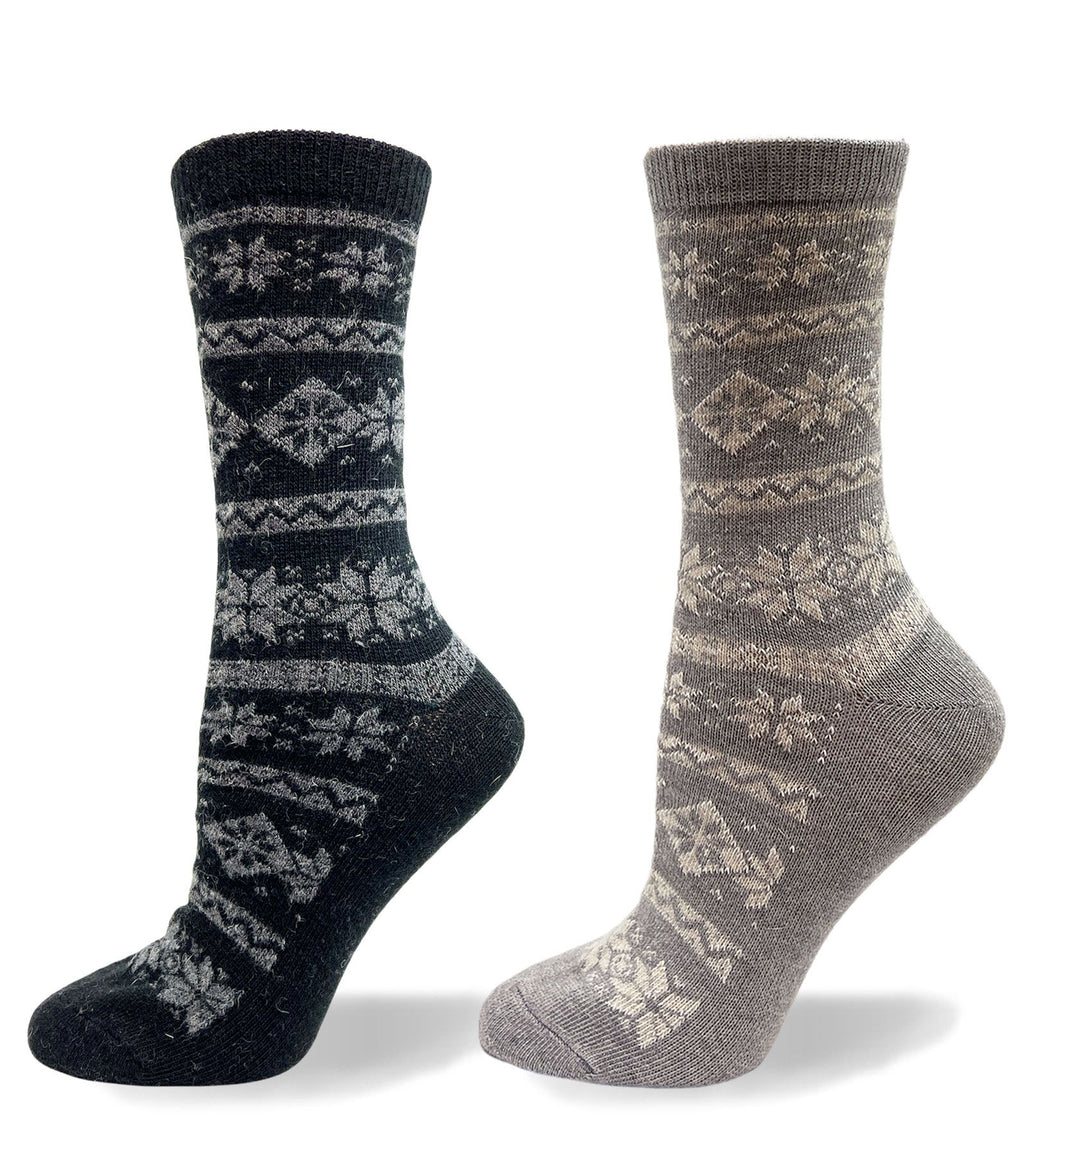 "Snowflake" Dress Socks by Point Zero - Medium